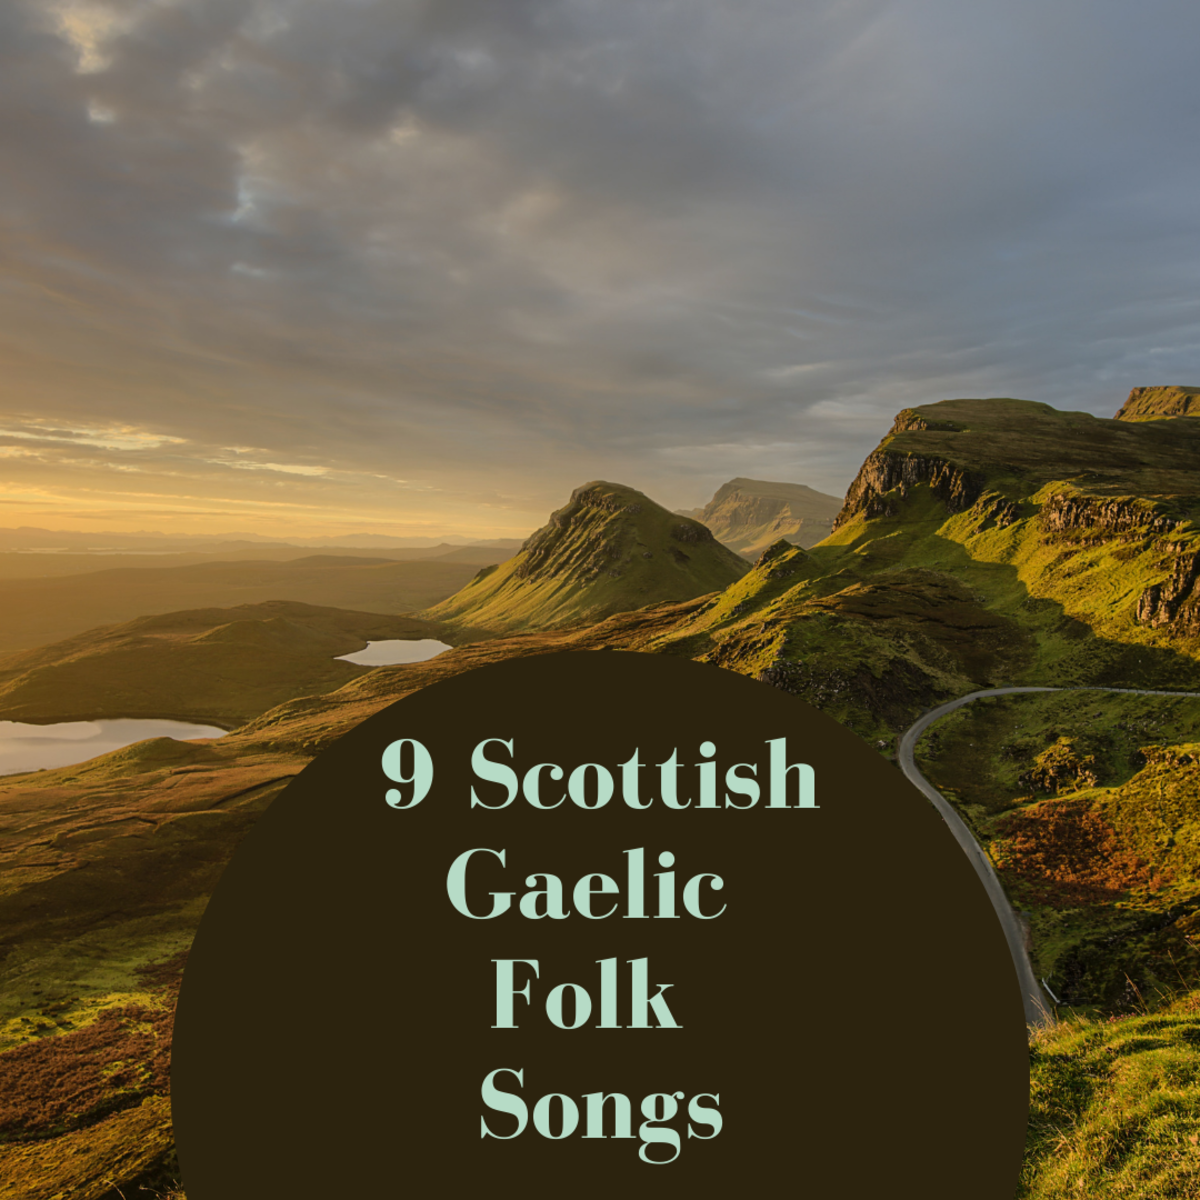 Nine Scottish Gaelic Folk Songs Sung by Julie Fowlis